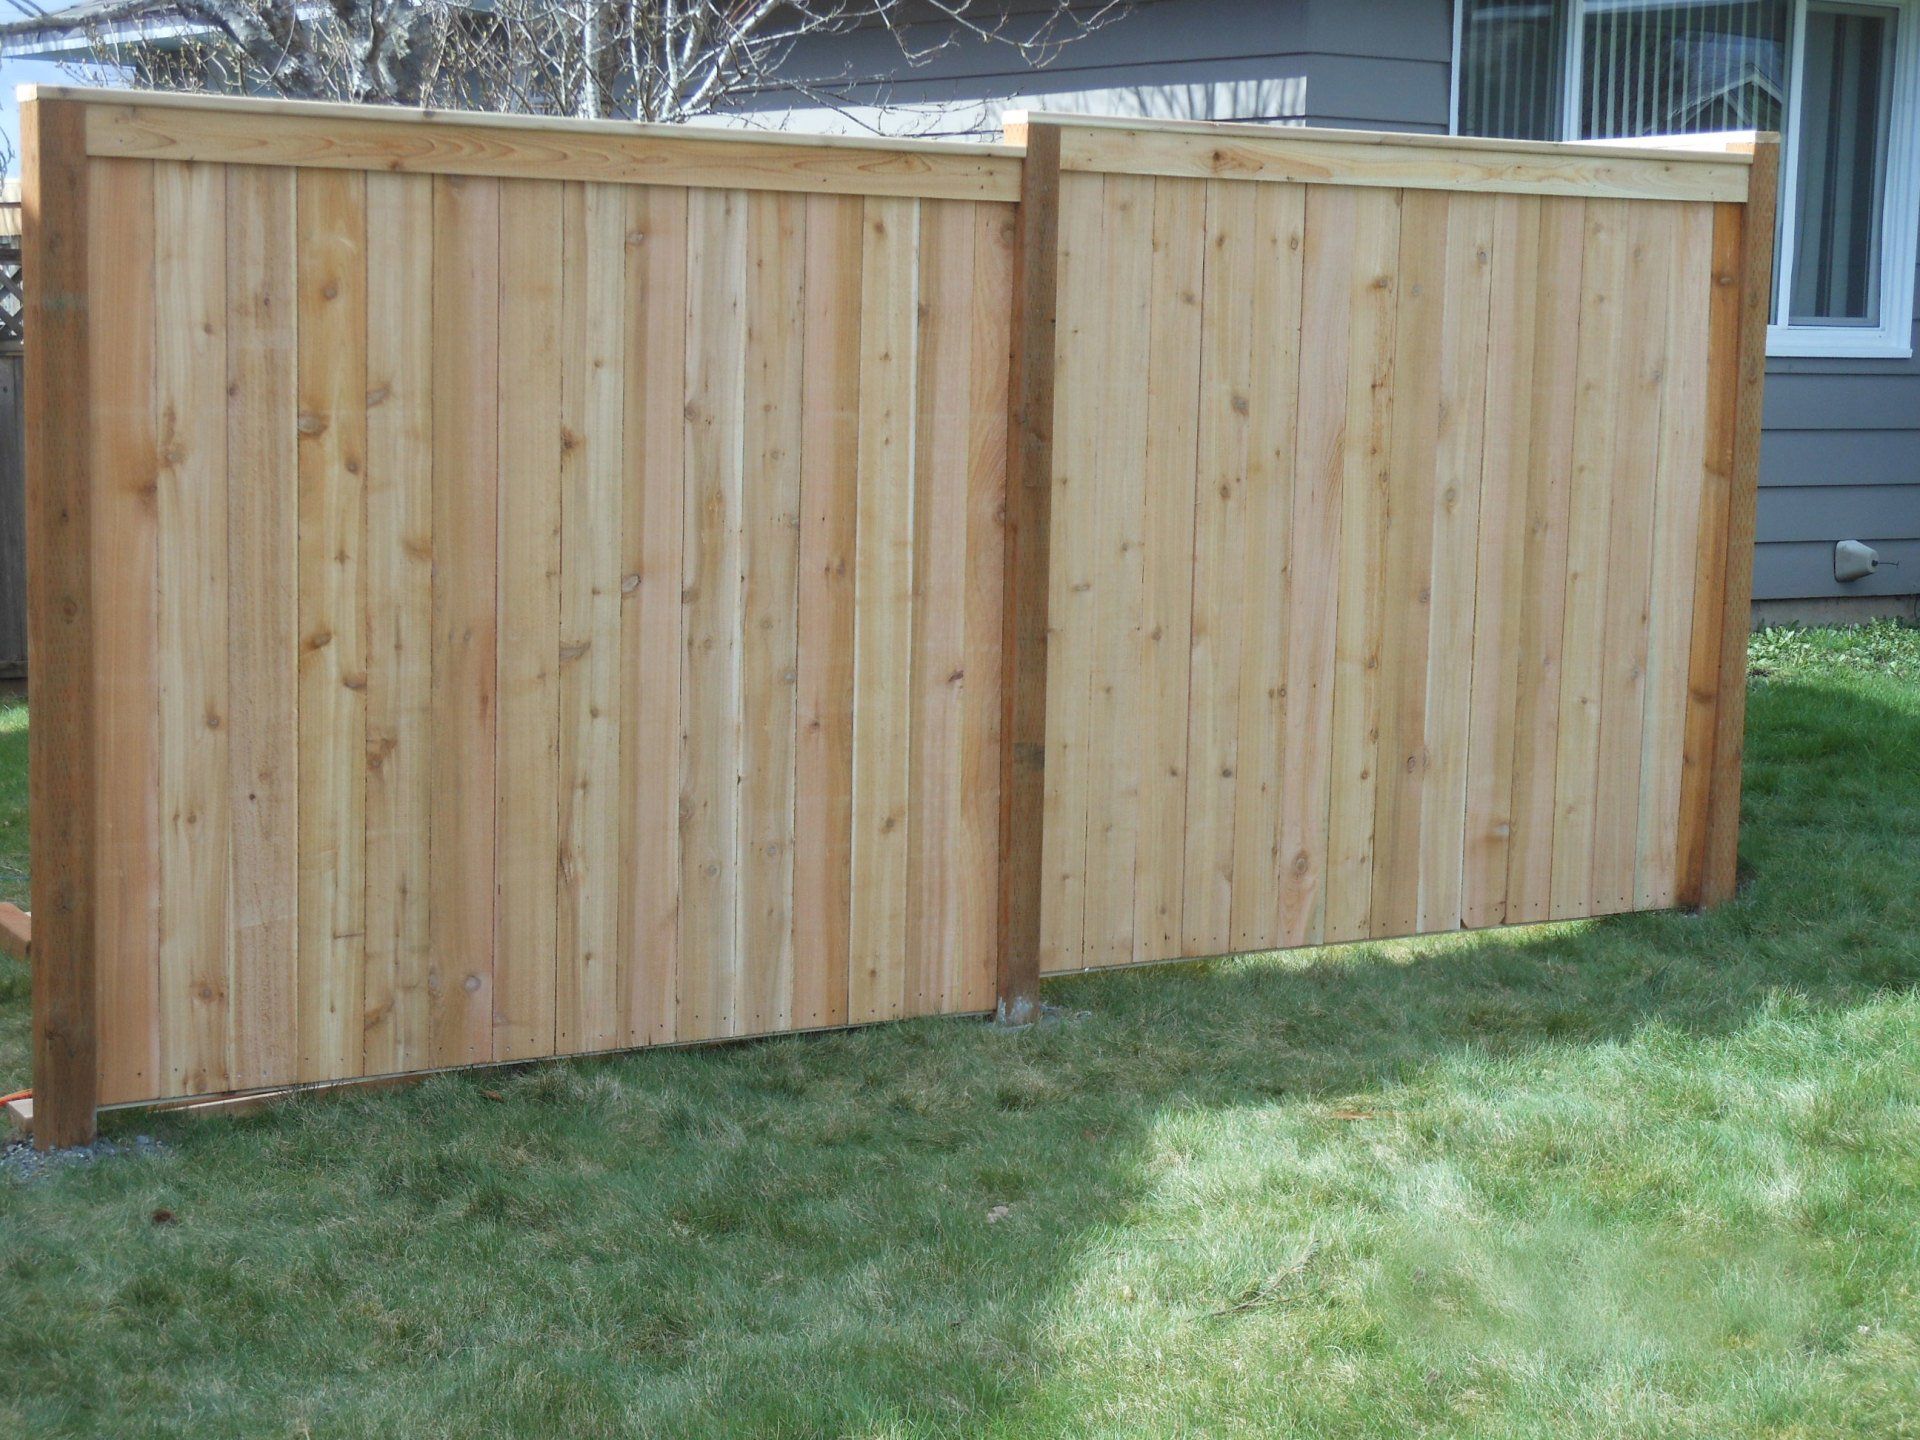 New fences — Fencing Installation in Fermdale, WA